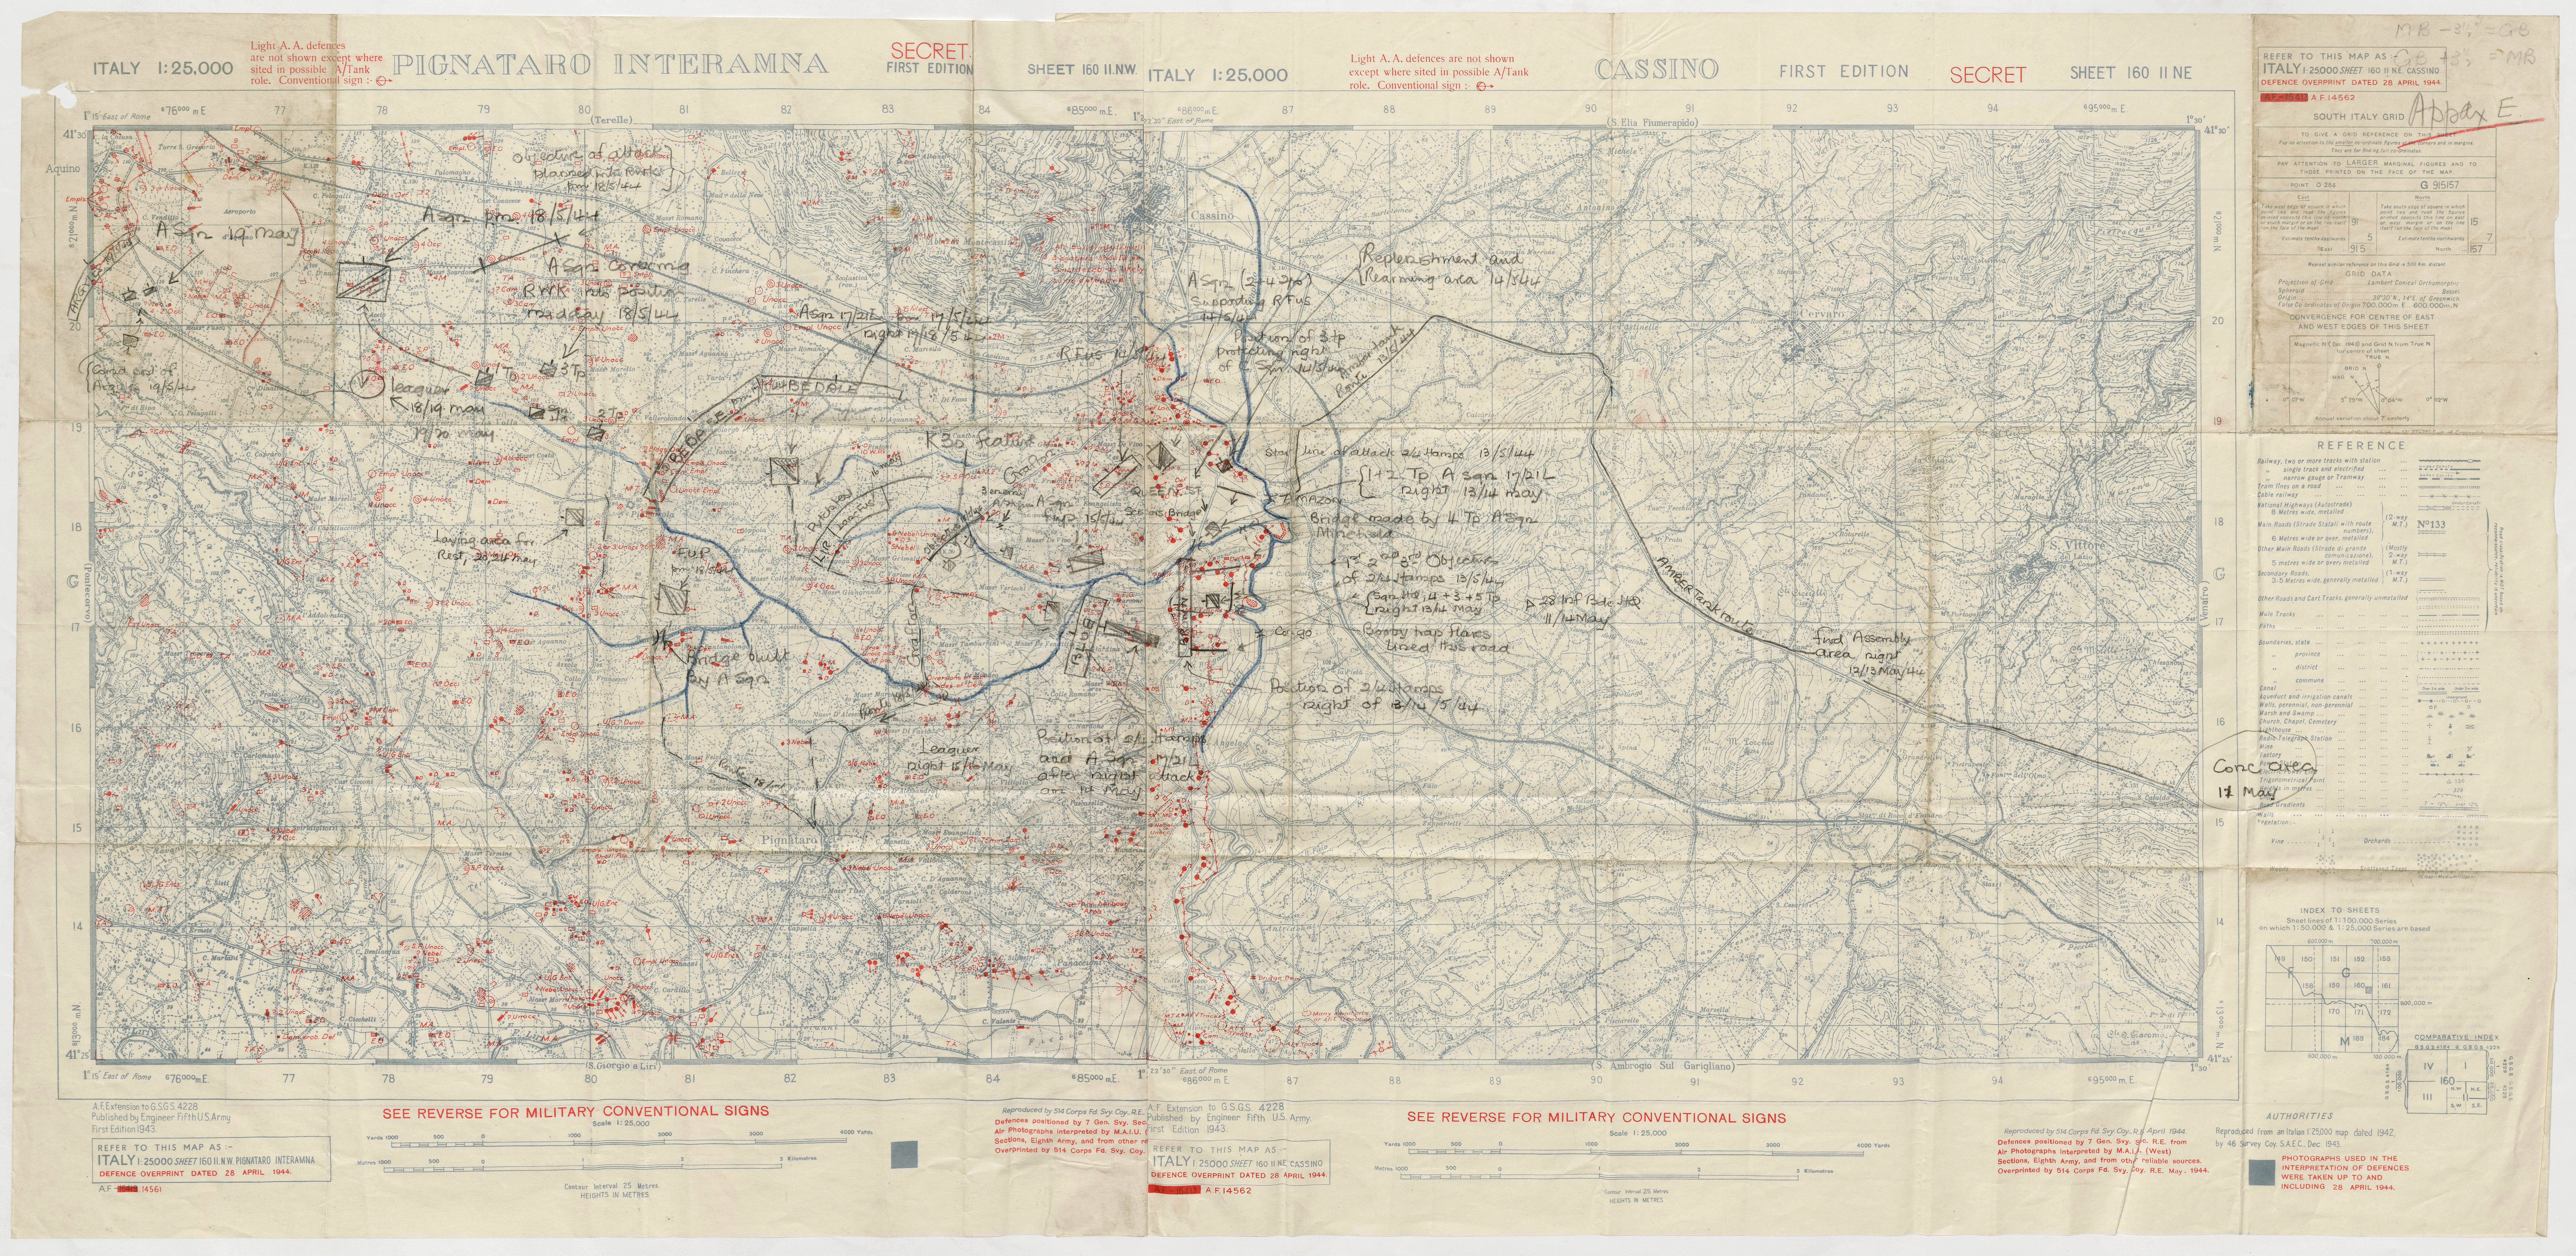 Pignatora - Cassino Battle map of the Liri Valley